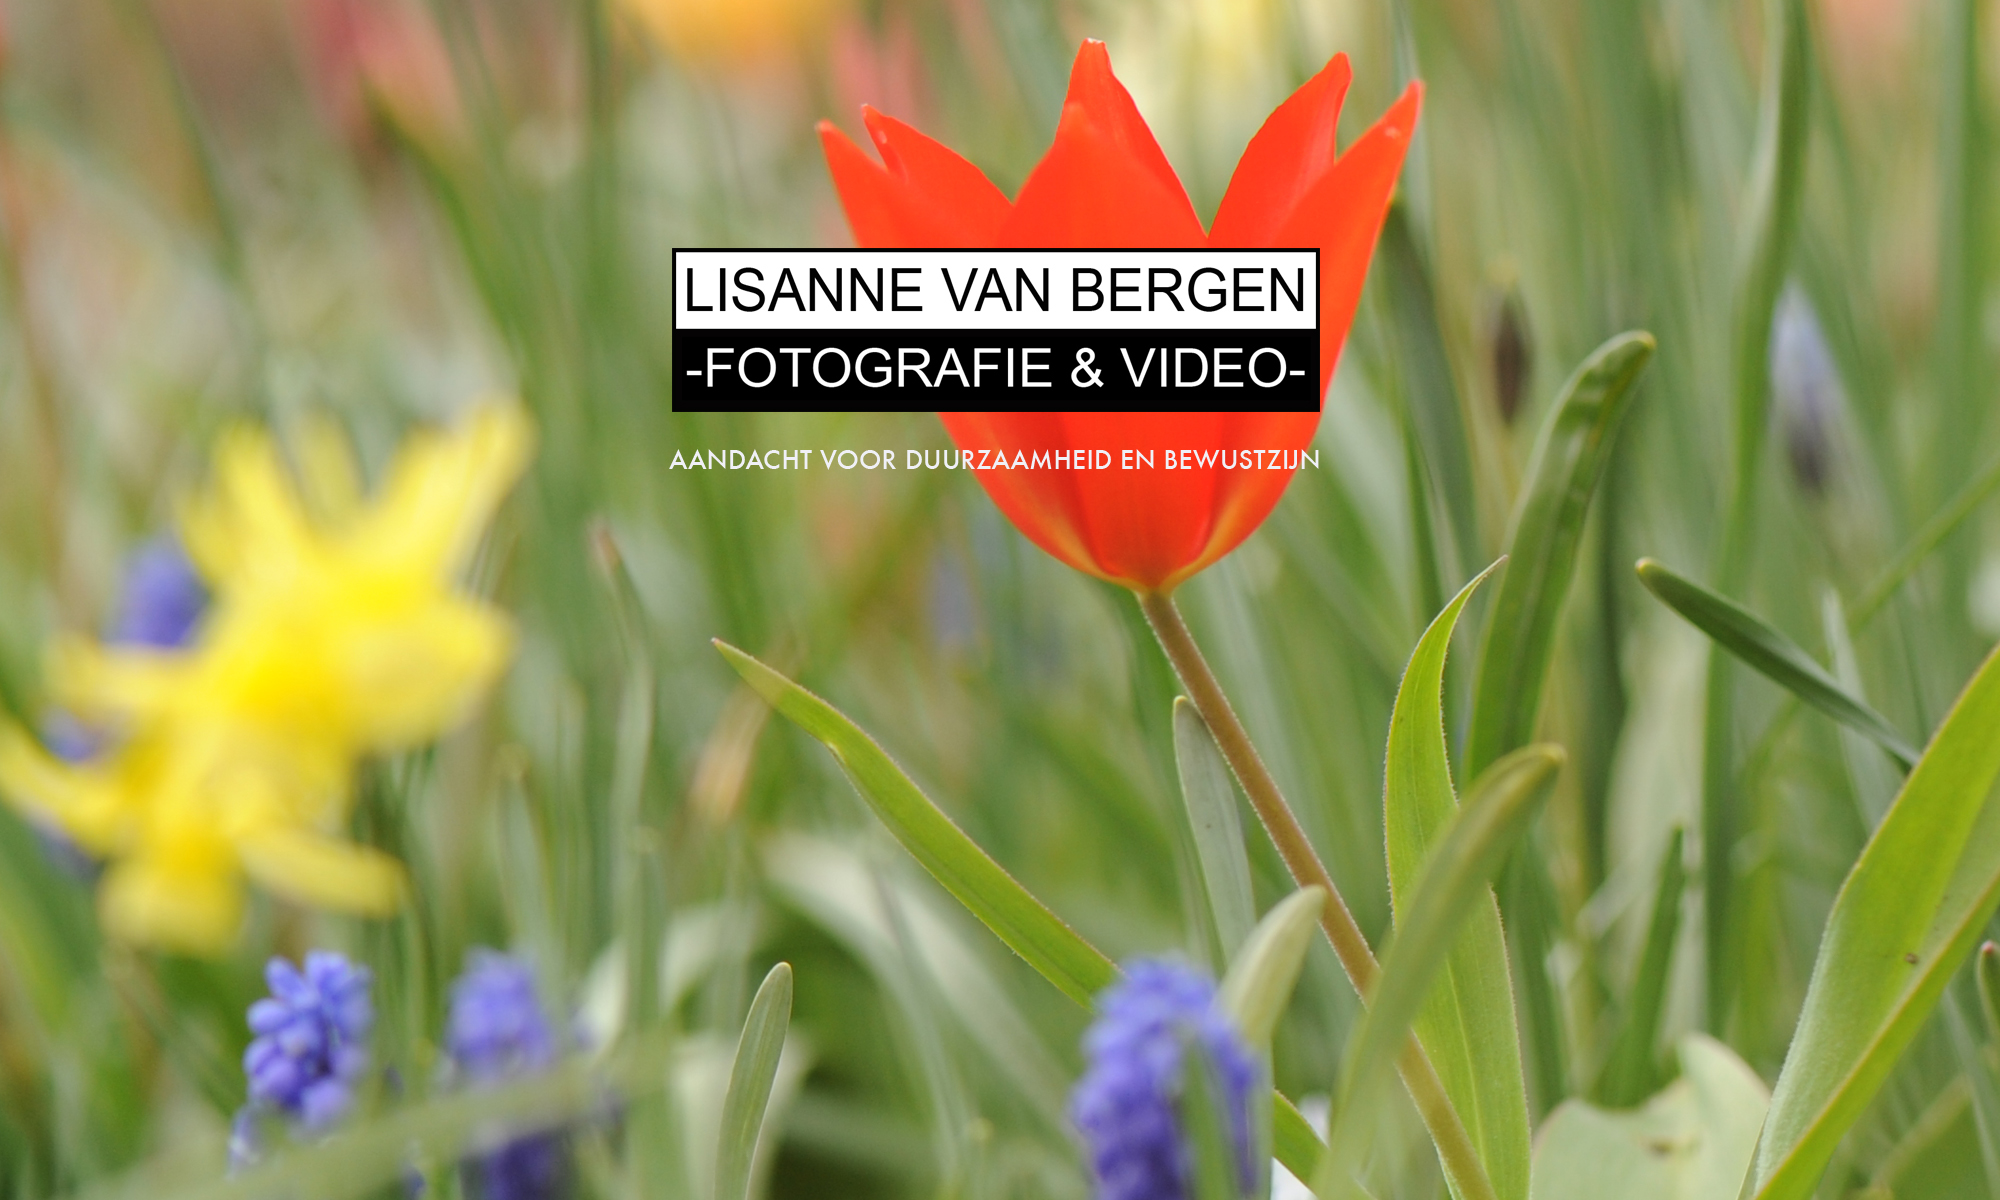 Lisanne van Bergen